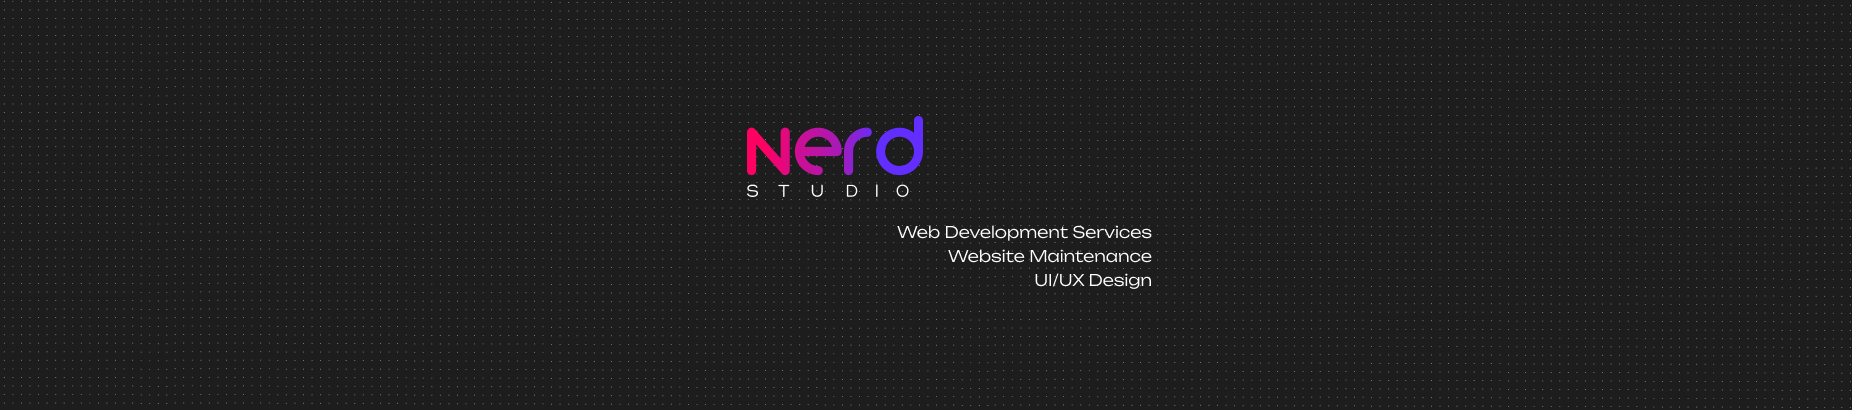 Nerd studio's profile banner